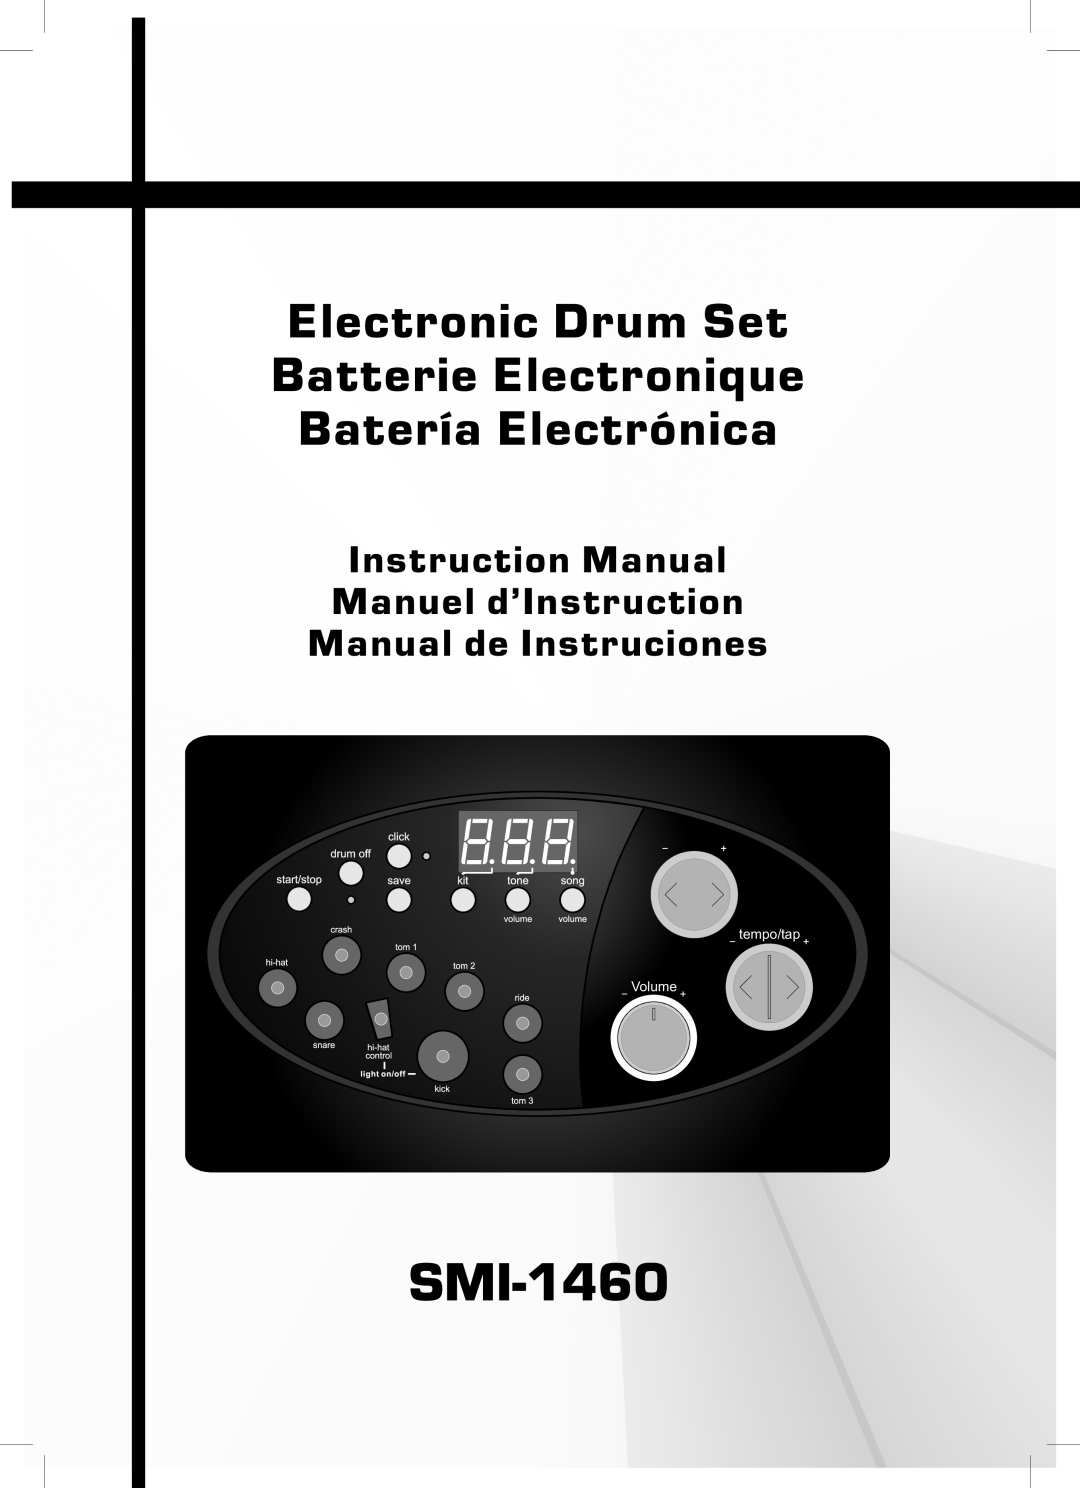 The Singing Machine SMI-1460 instruction manual Electronic Drum Set, Batterie Electronique, Batería Electrónica, tempo/tap 